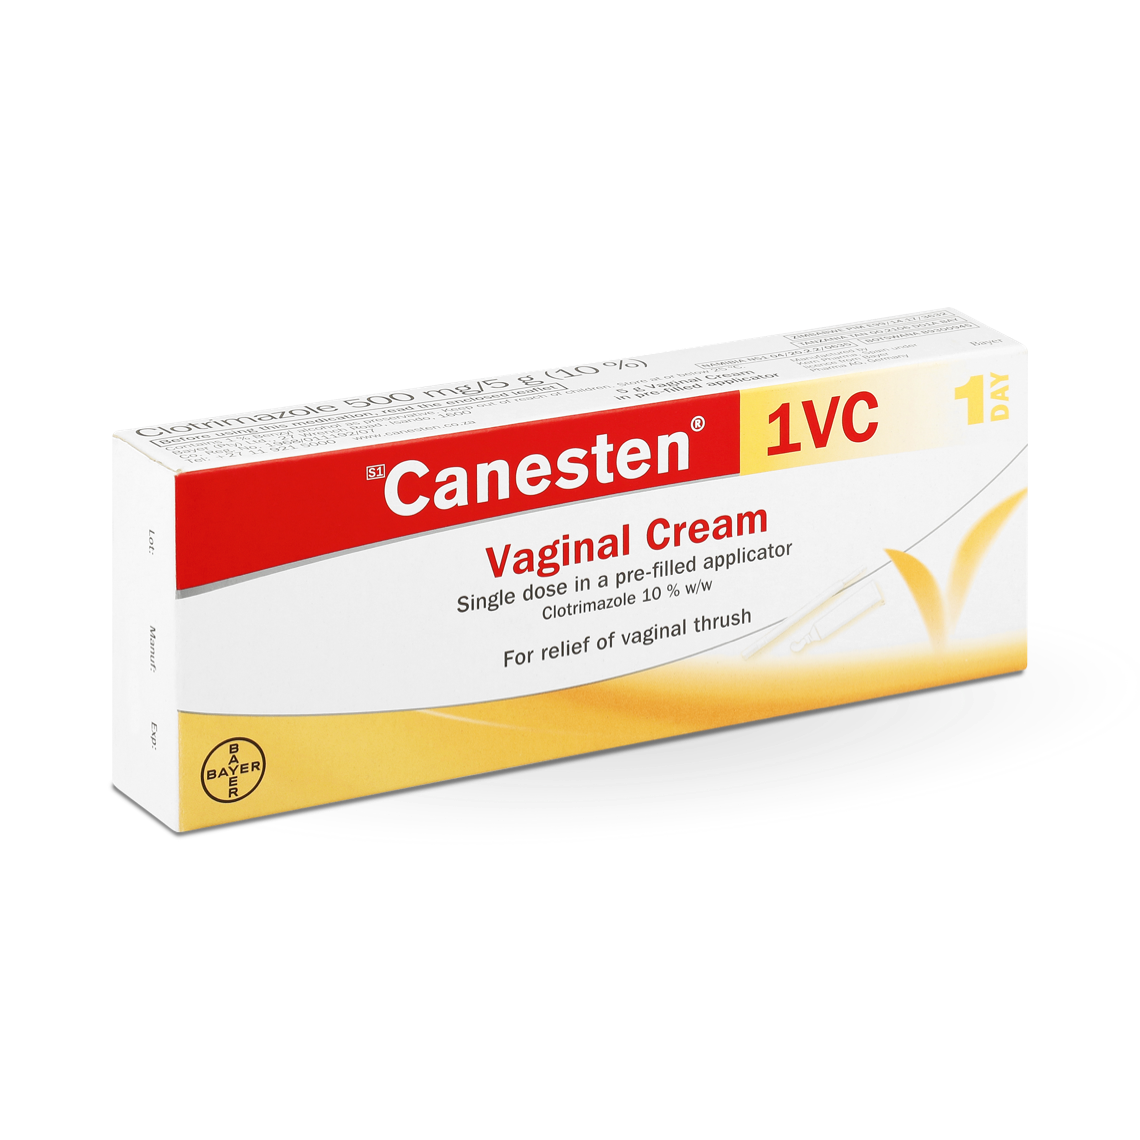 Canesten Thrush Internal Cream 10% w/w vaginal cream with pre-filled applicator